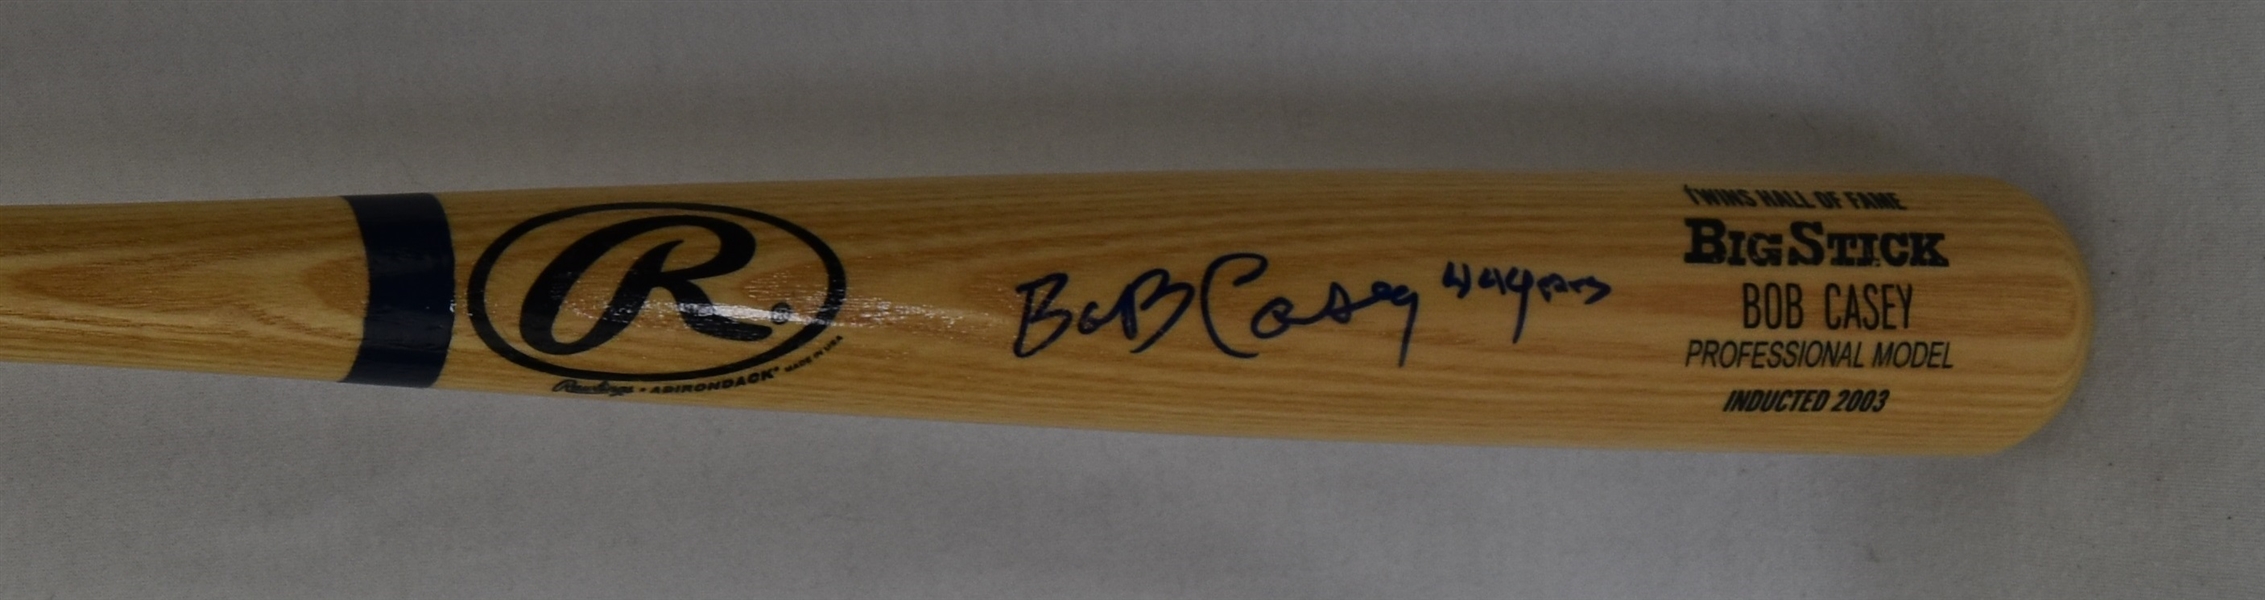 Bob Casey Autographed Bat